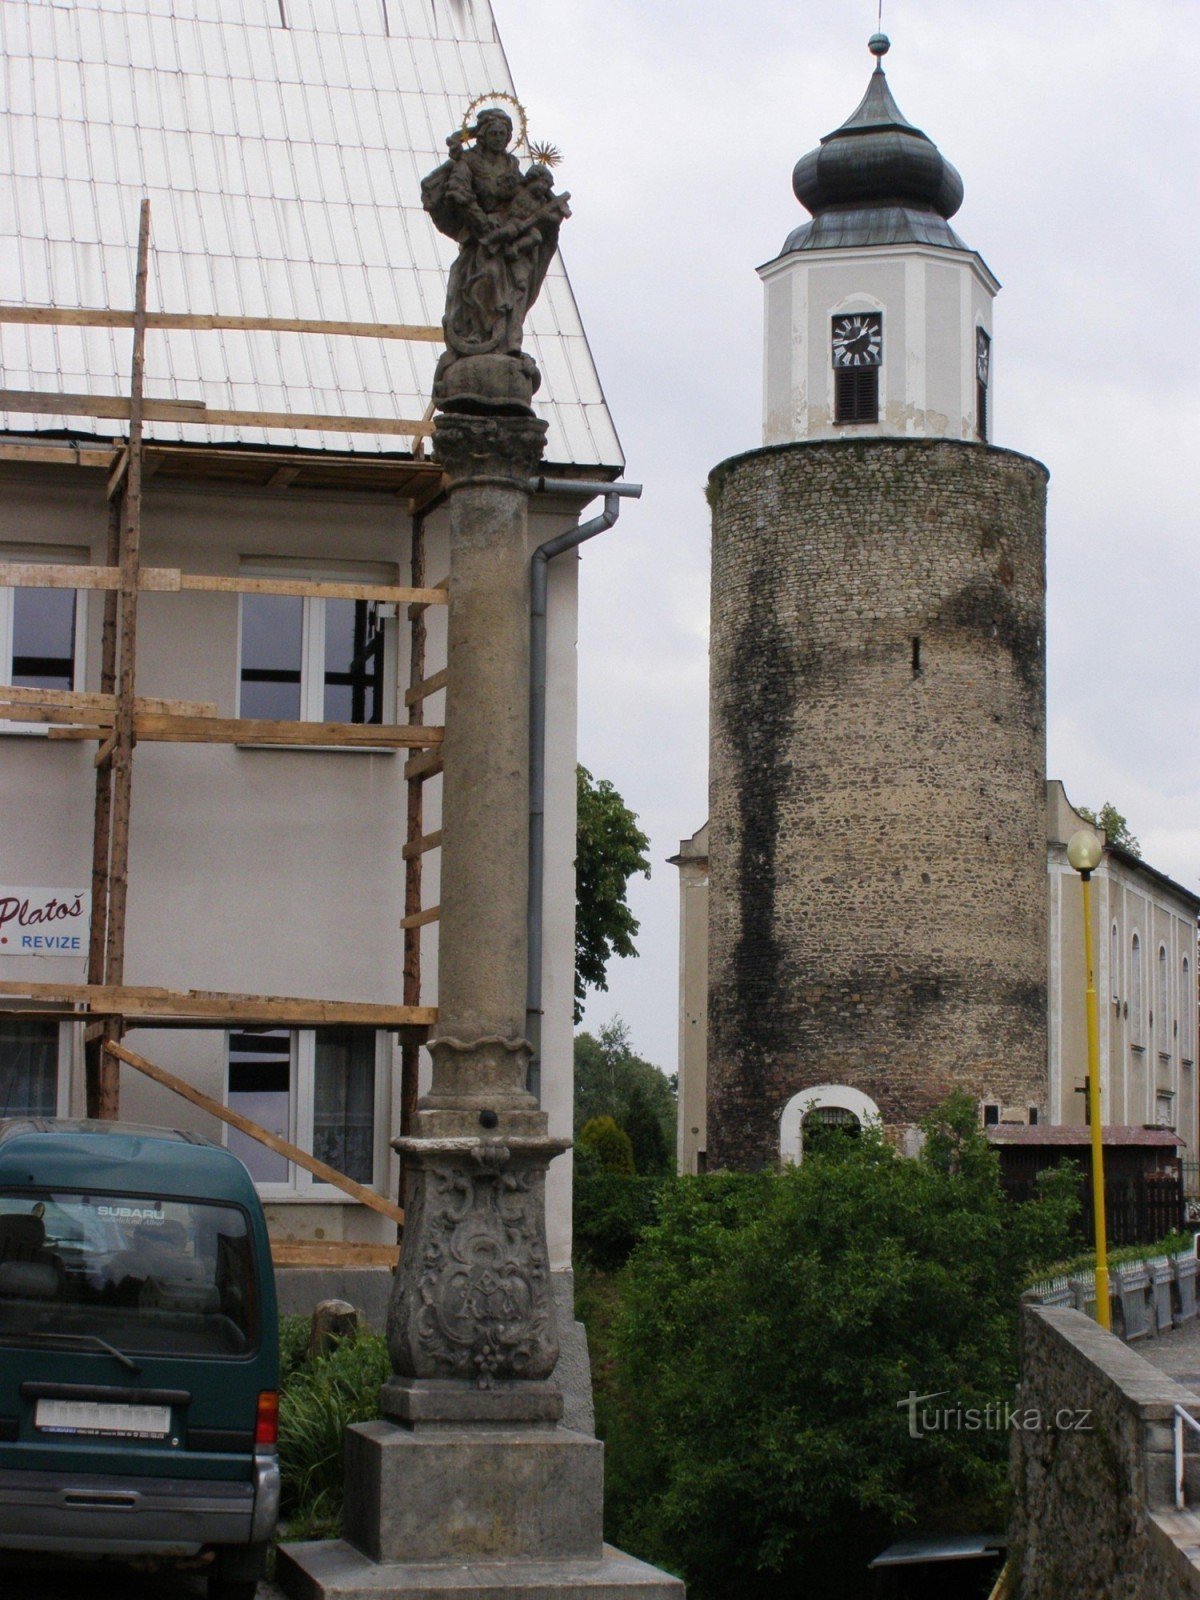 Žulová - una colonna con una statua della Madonna